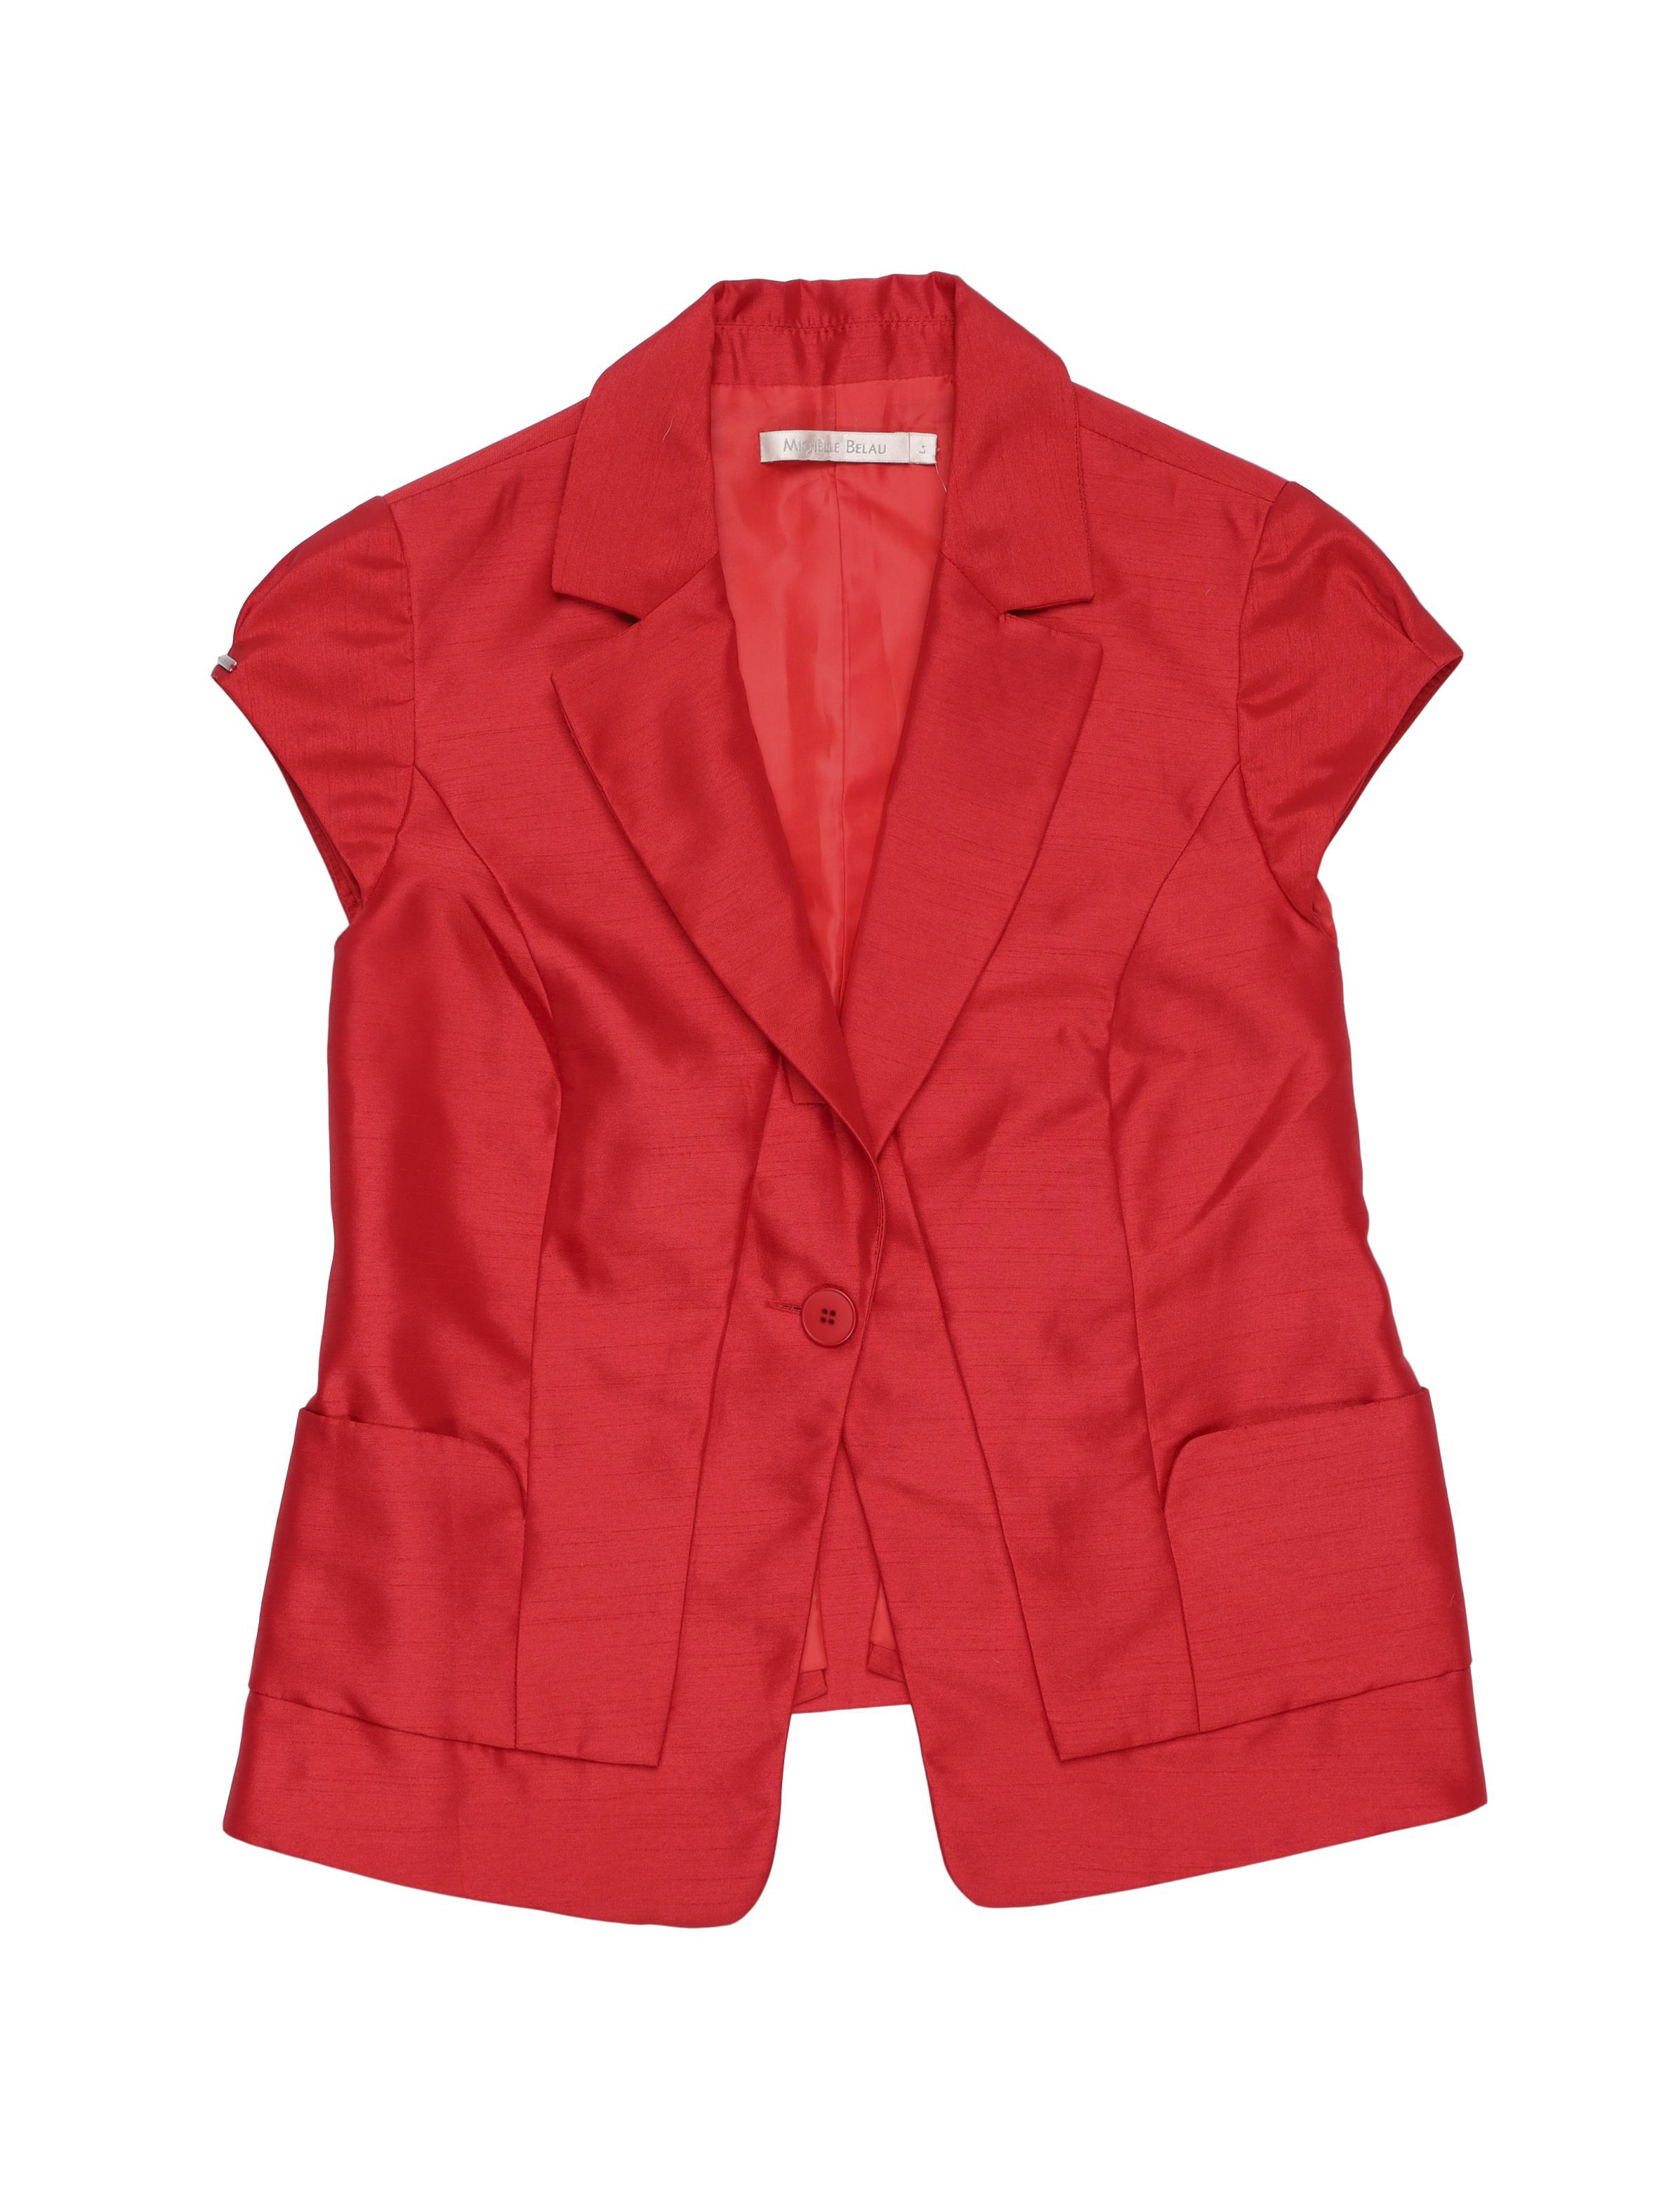 Blazer rojo Michelle Belau, con solapa, 1 botón, 2 bolsillos y forro